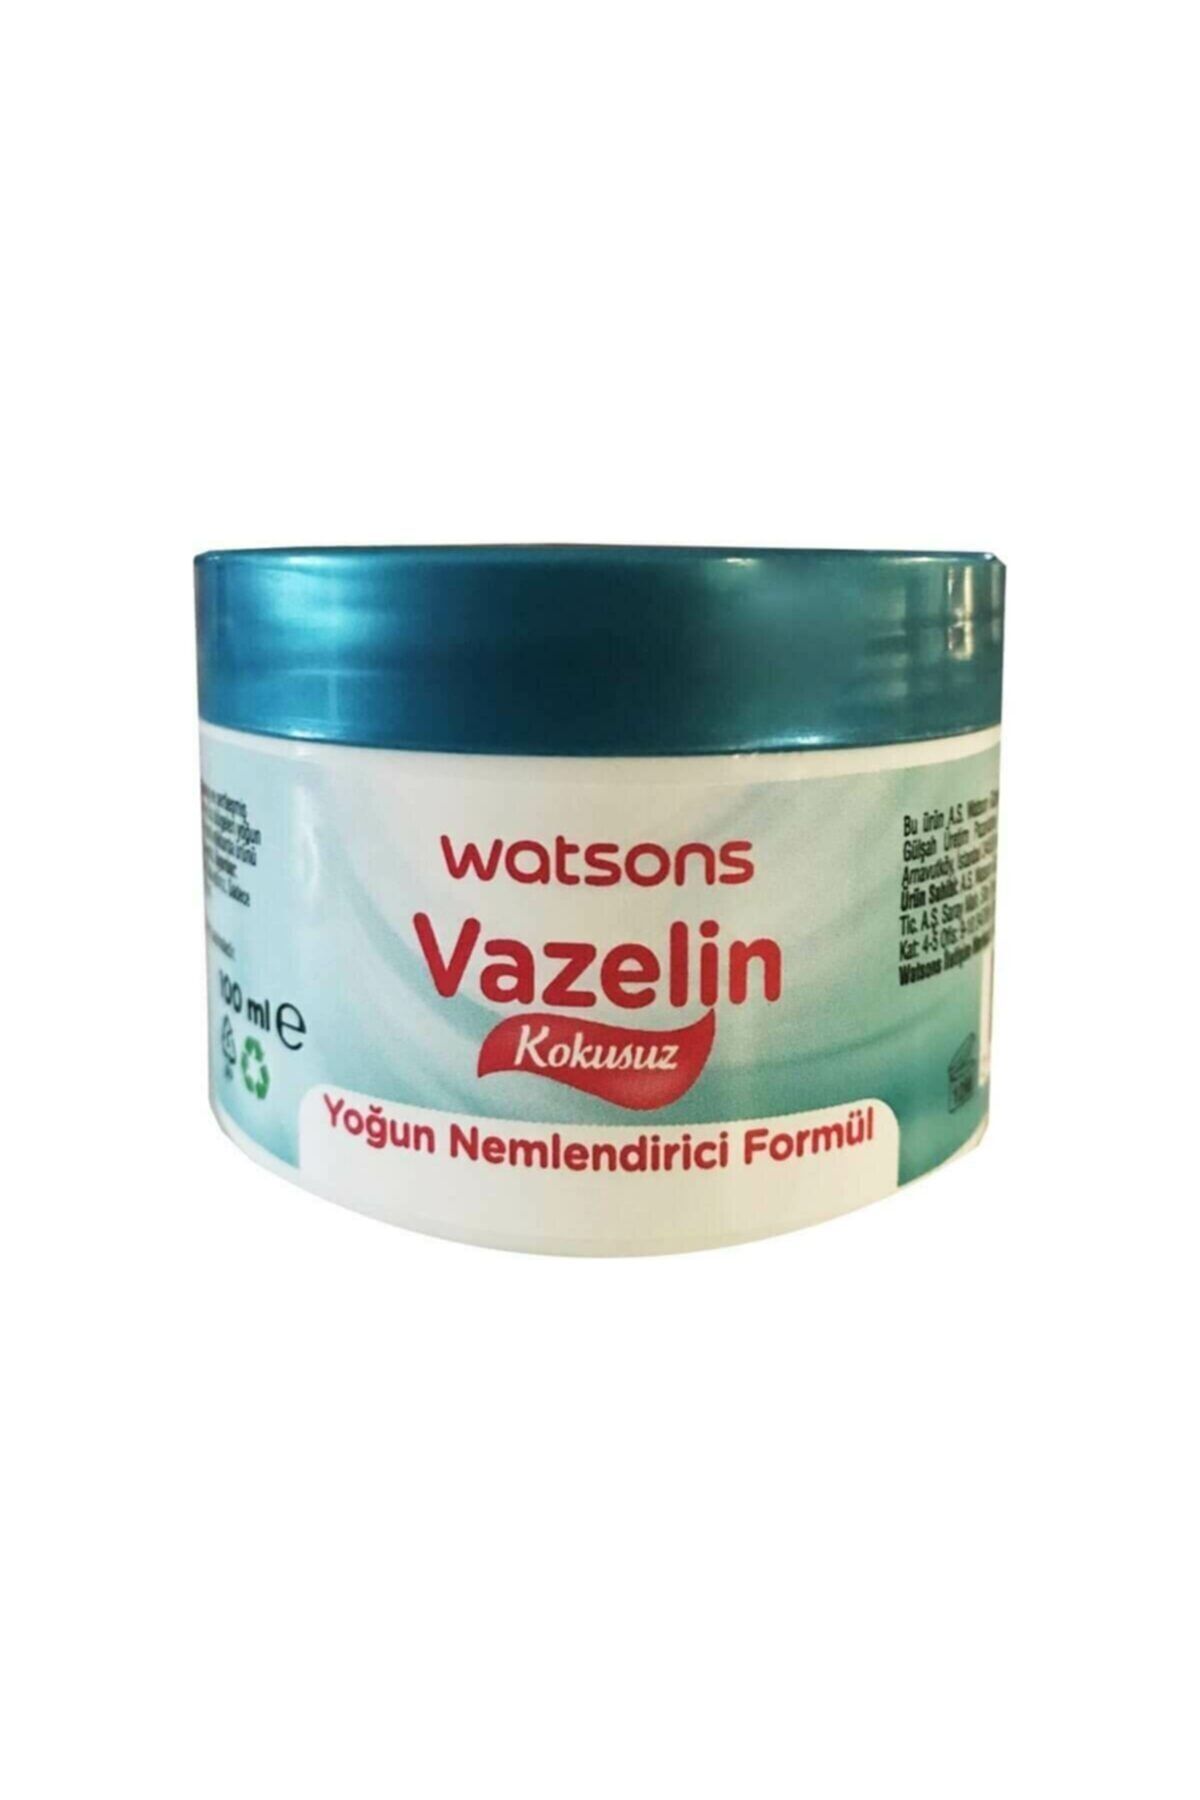 Watsons Vazelin Original 100 ml cilt bariyerini korur